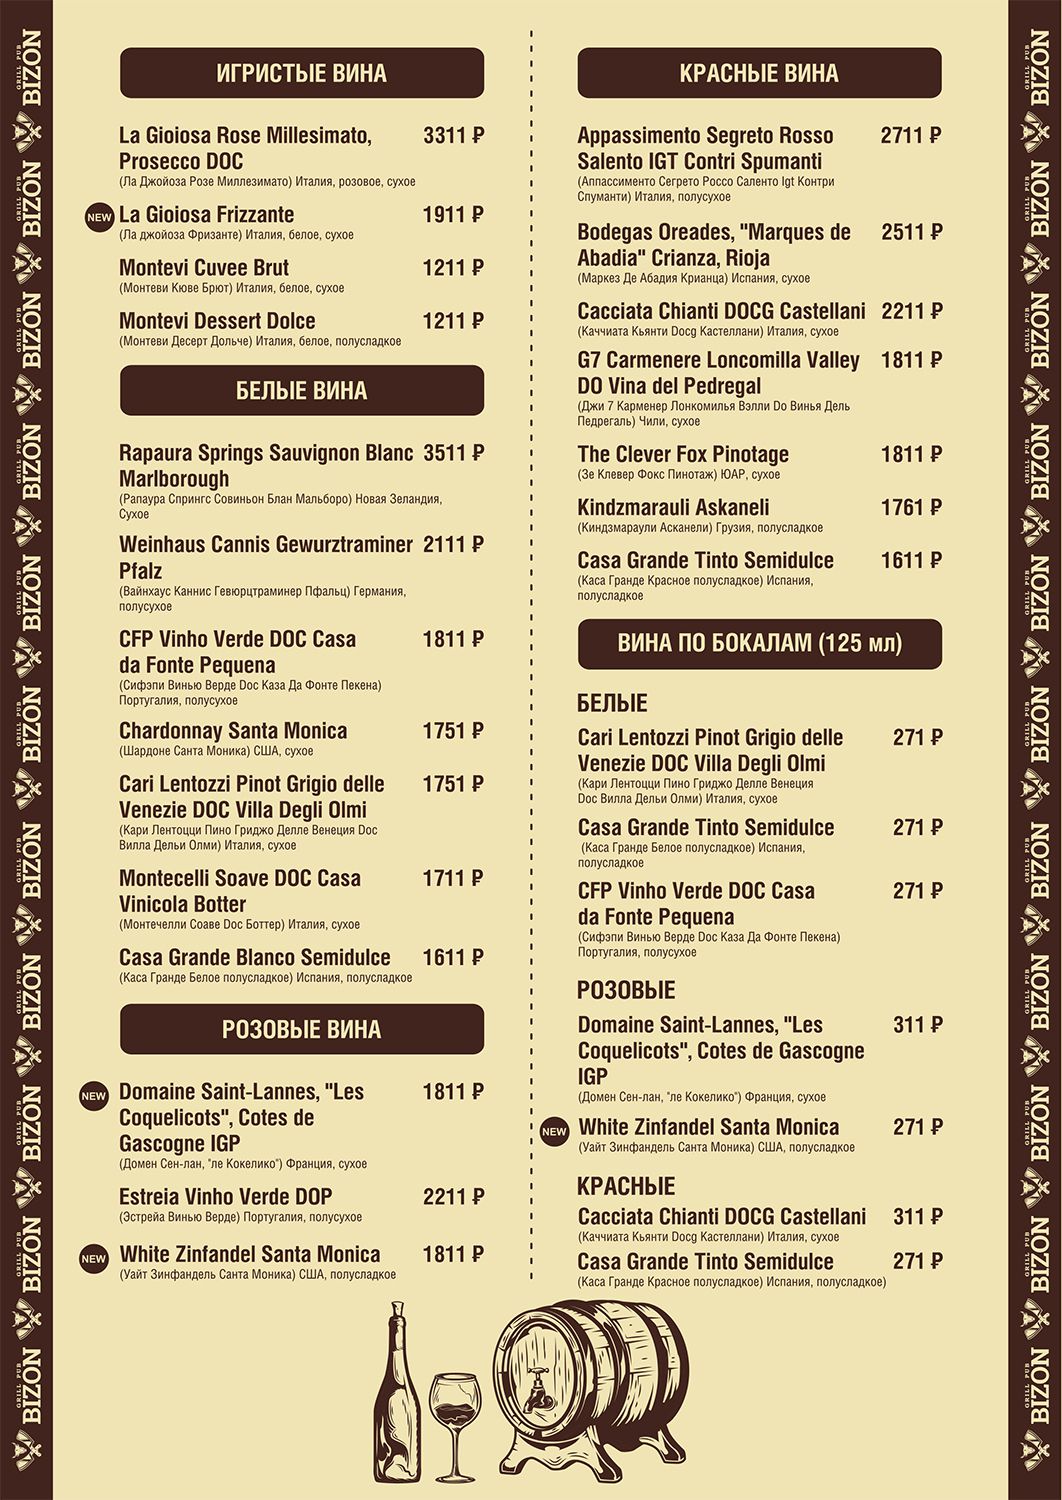 Portside pub & grille sebastian menu